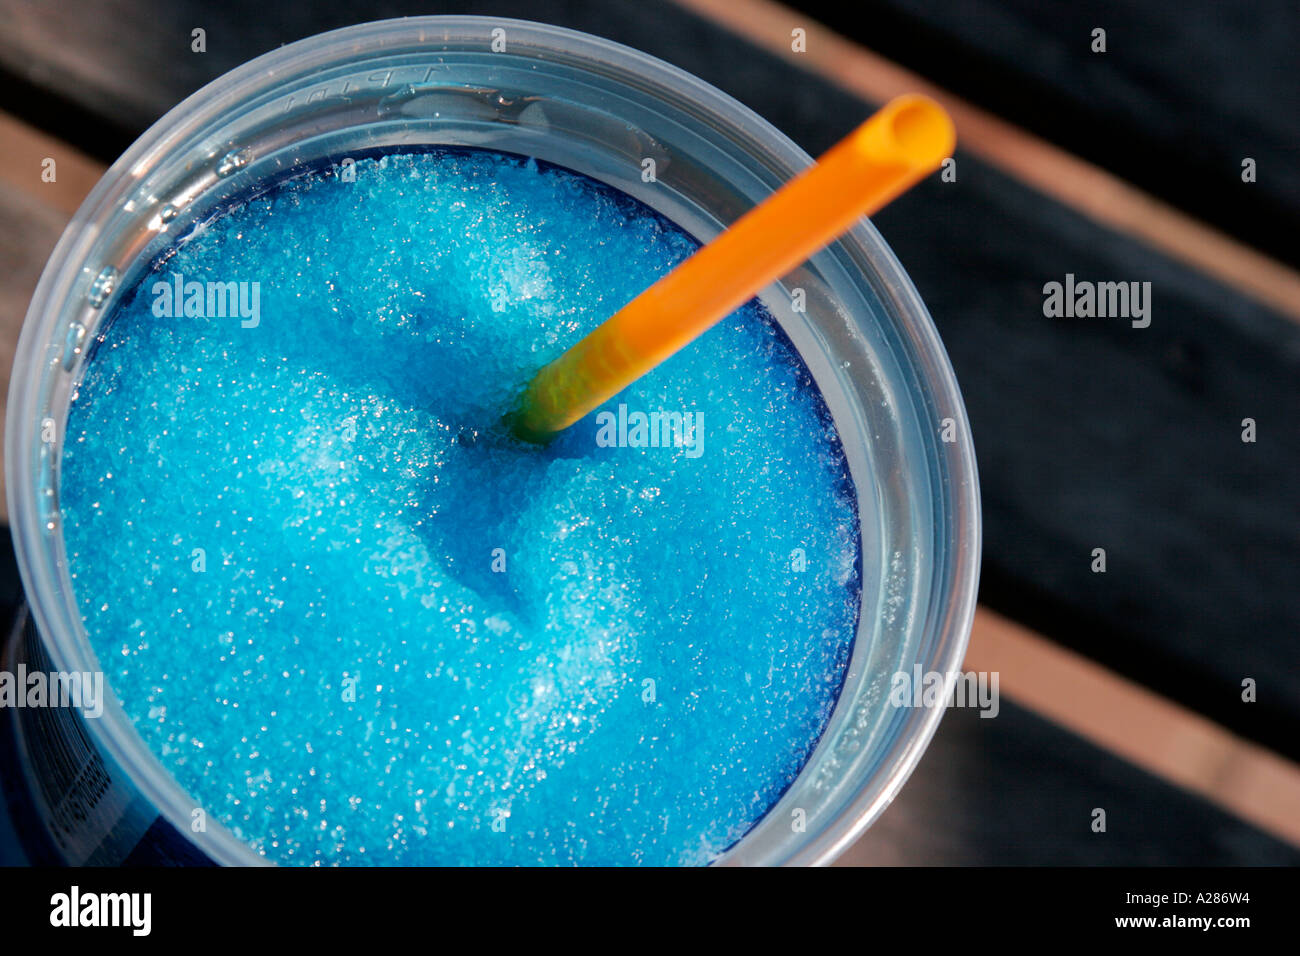 Blue slush frozen iced drink with straw Stock Photo